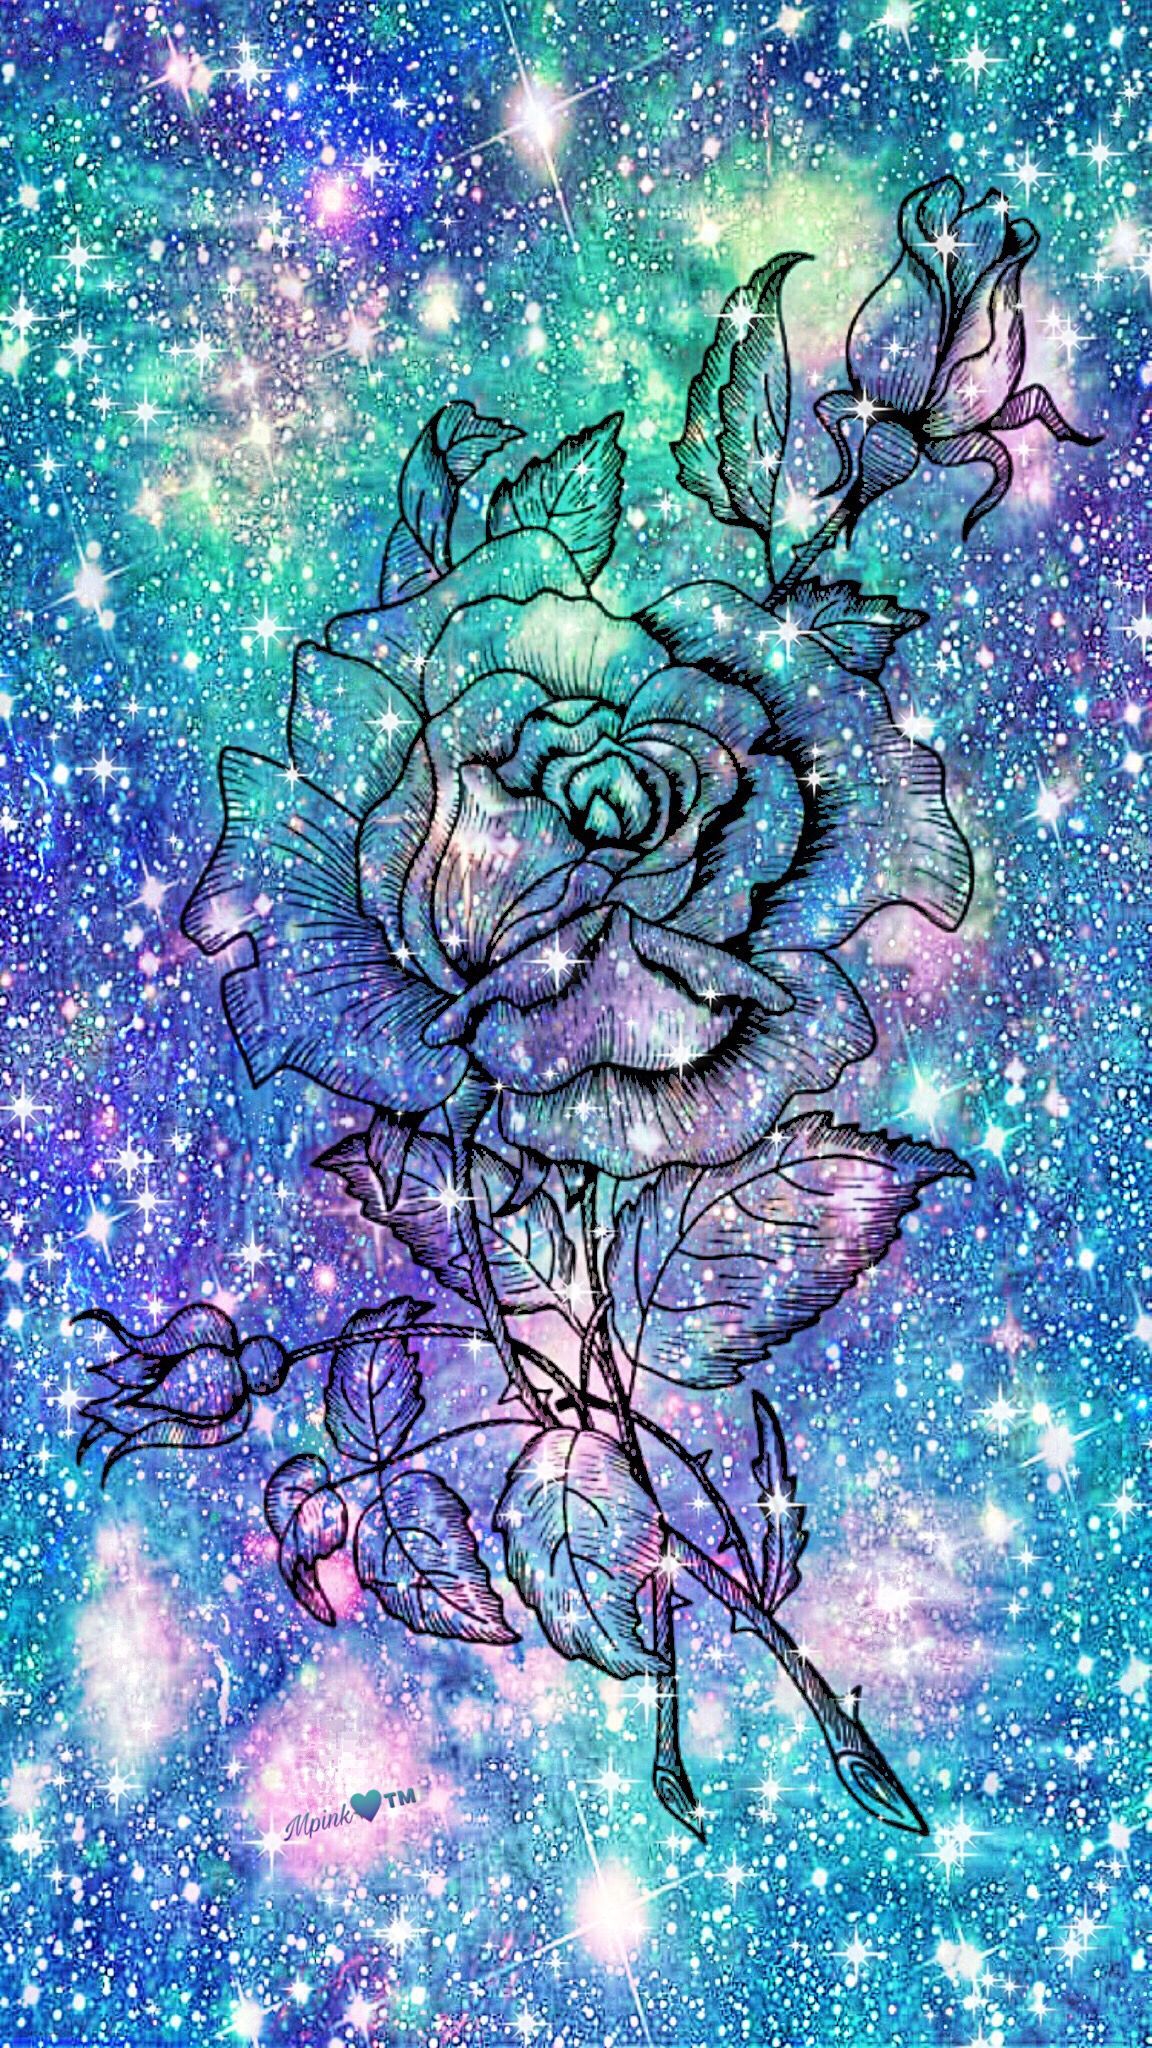 Ice Flower Galaxy Wallpaper #androidwallpaper #iphonewallpaper #wallpaper # galaxy #sparkle #glitter #locks. Art wallpaper, Galaxy wallpaper, Cute galaxy wallpaper